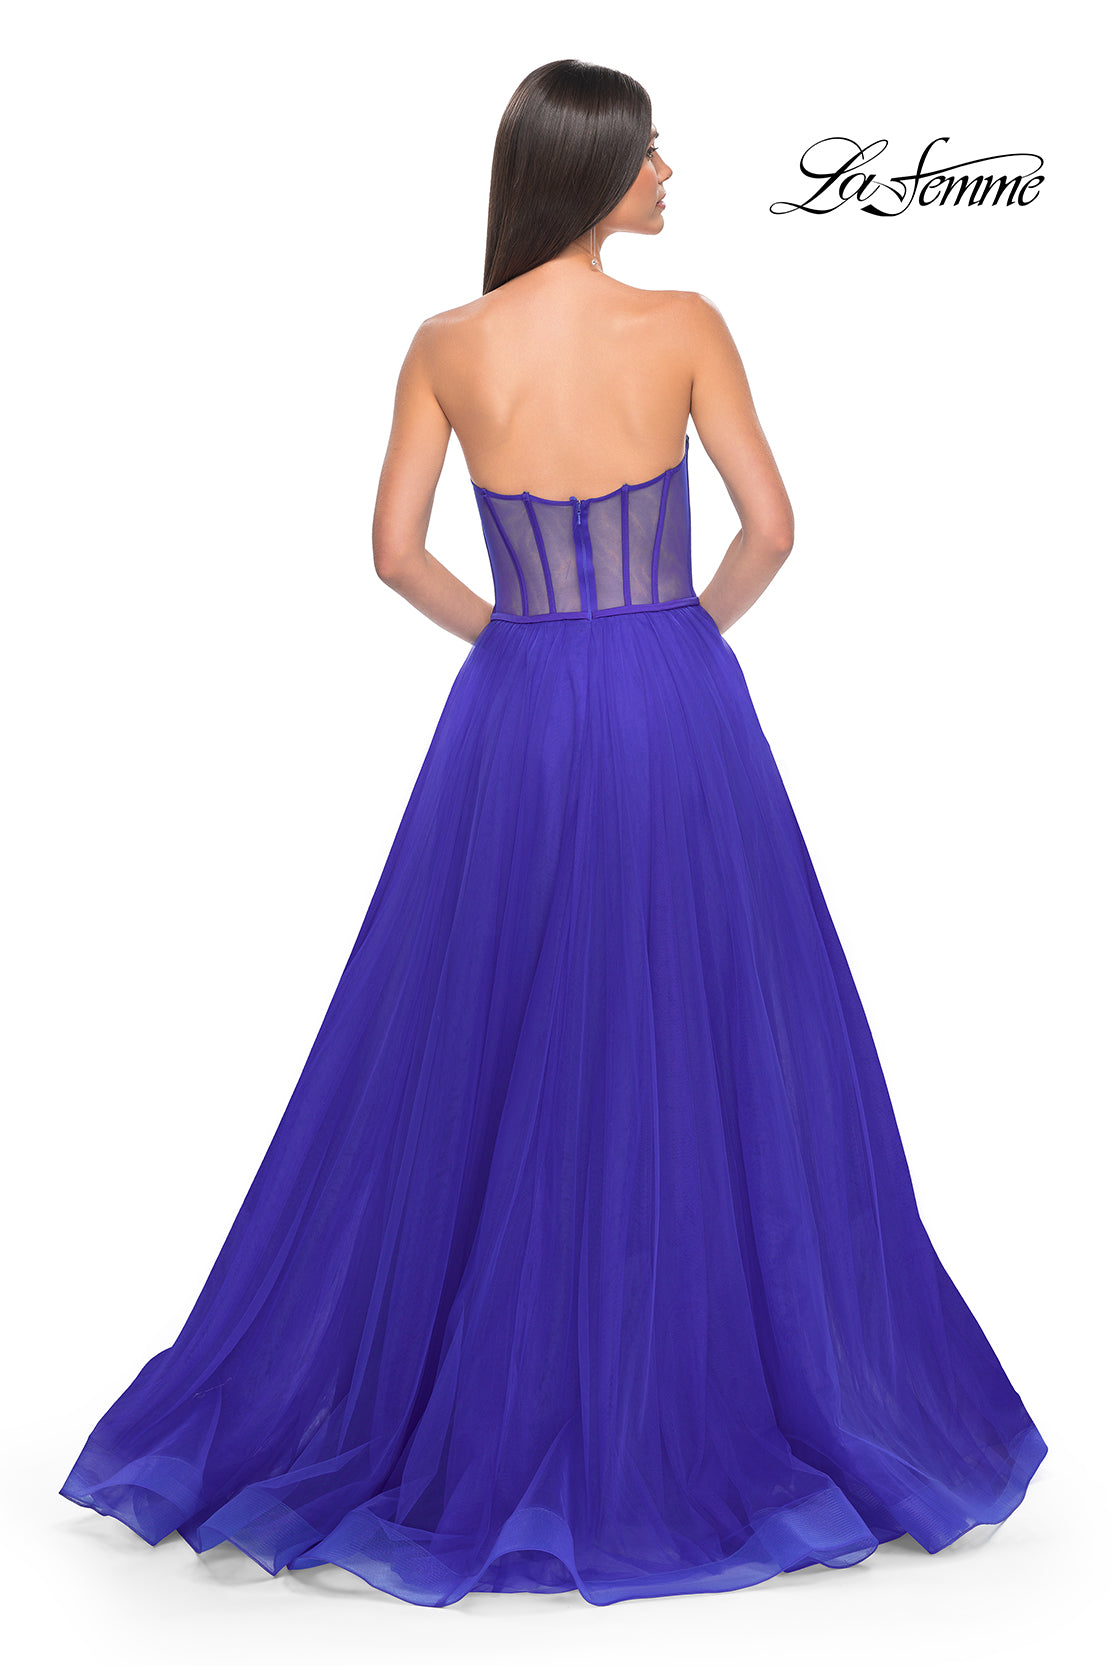 La-Femme-32424-Sweetheart-Neckline-Zipper-Back-High-Slit-Satin-Tulle-A-Line-Royal-Blue-Evening-Dress-B-Chic-Fashions-Prom-Dress